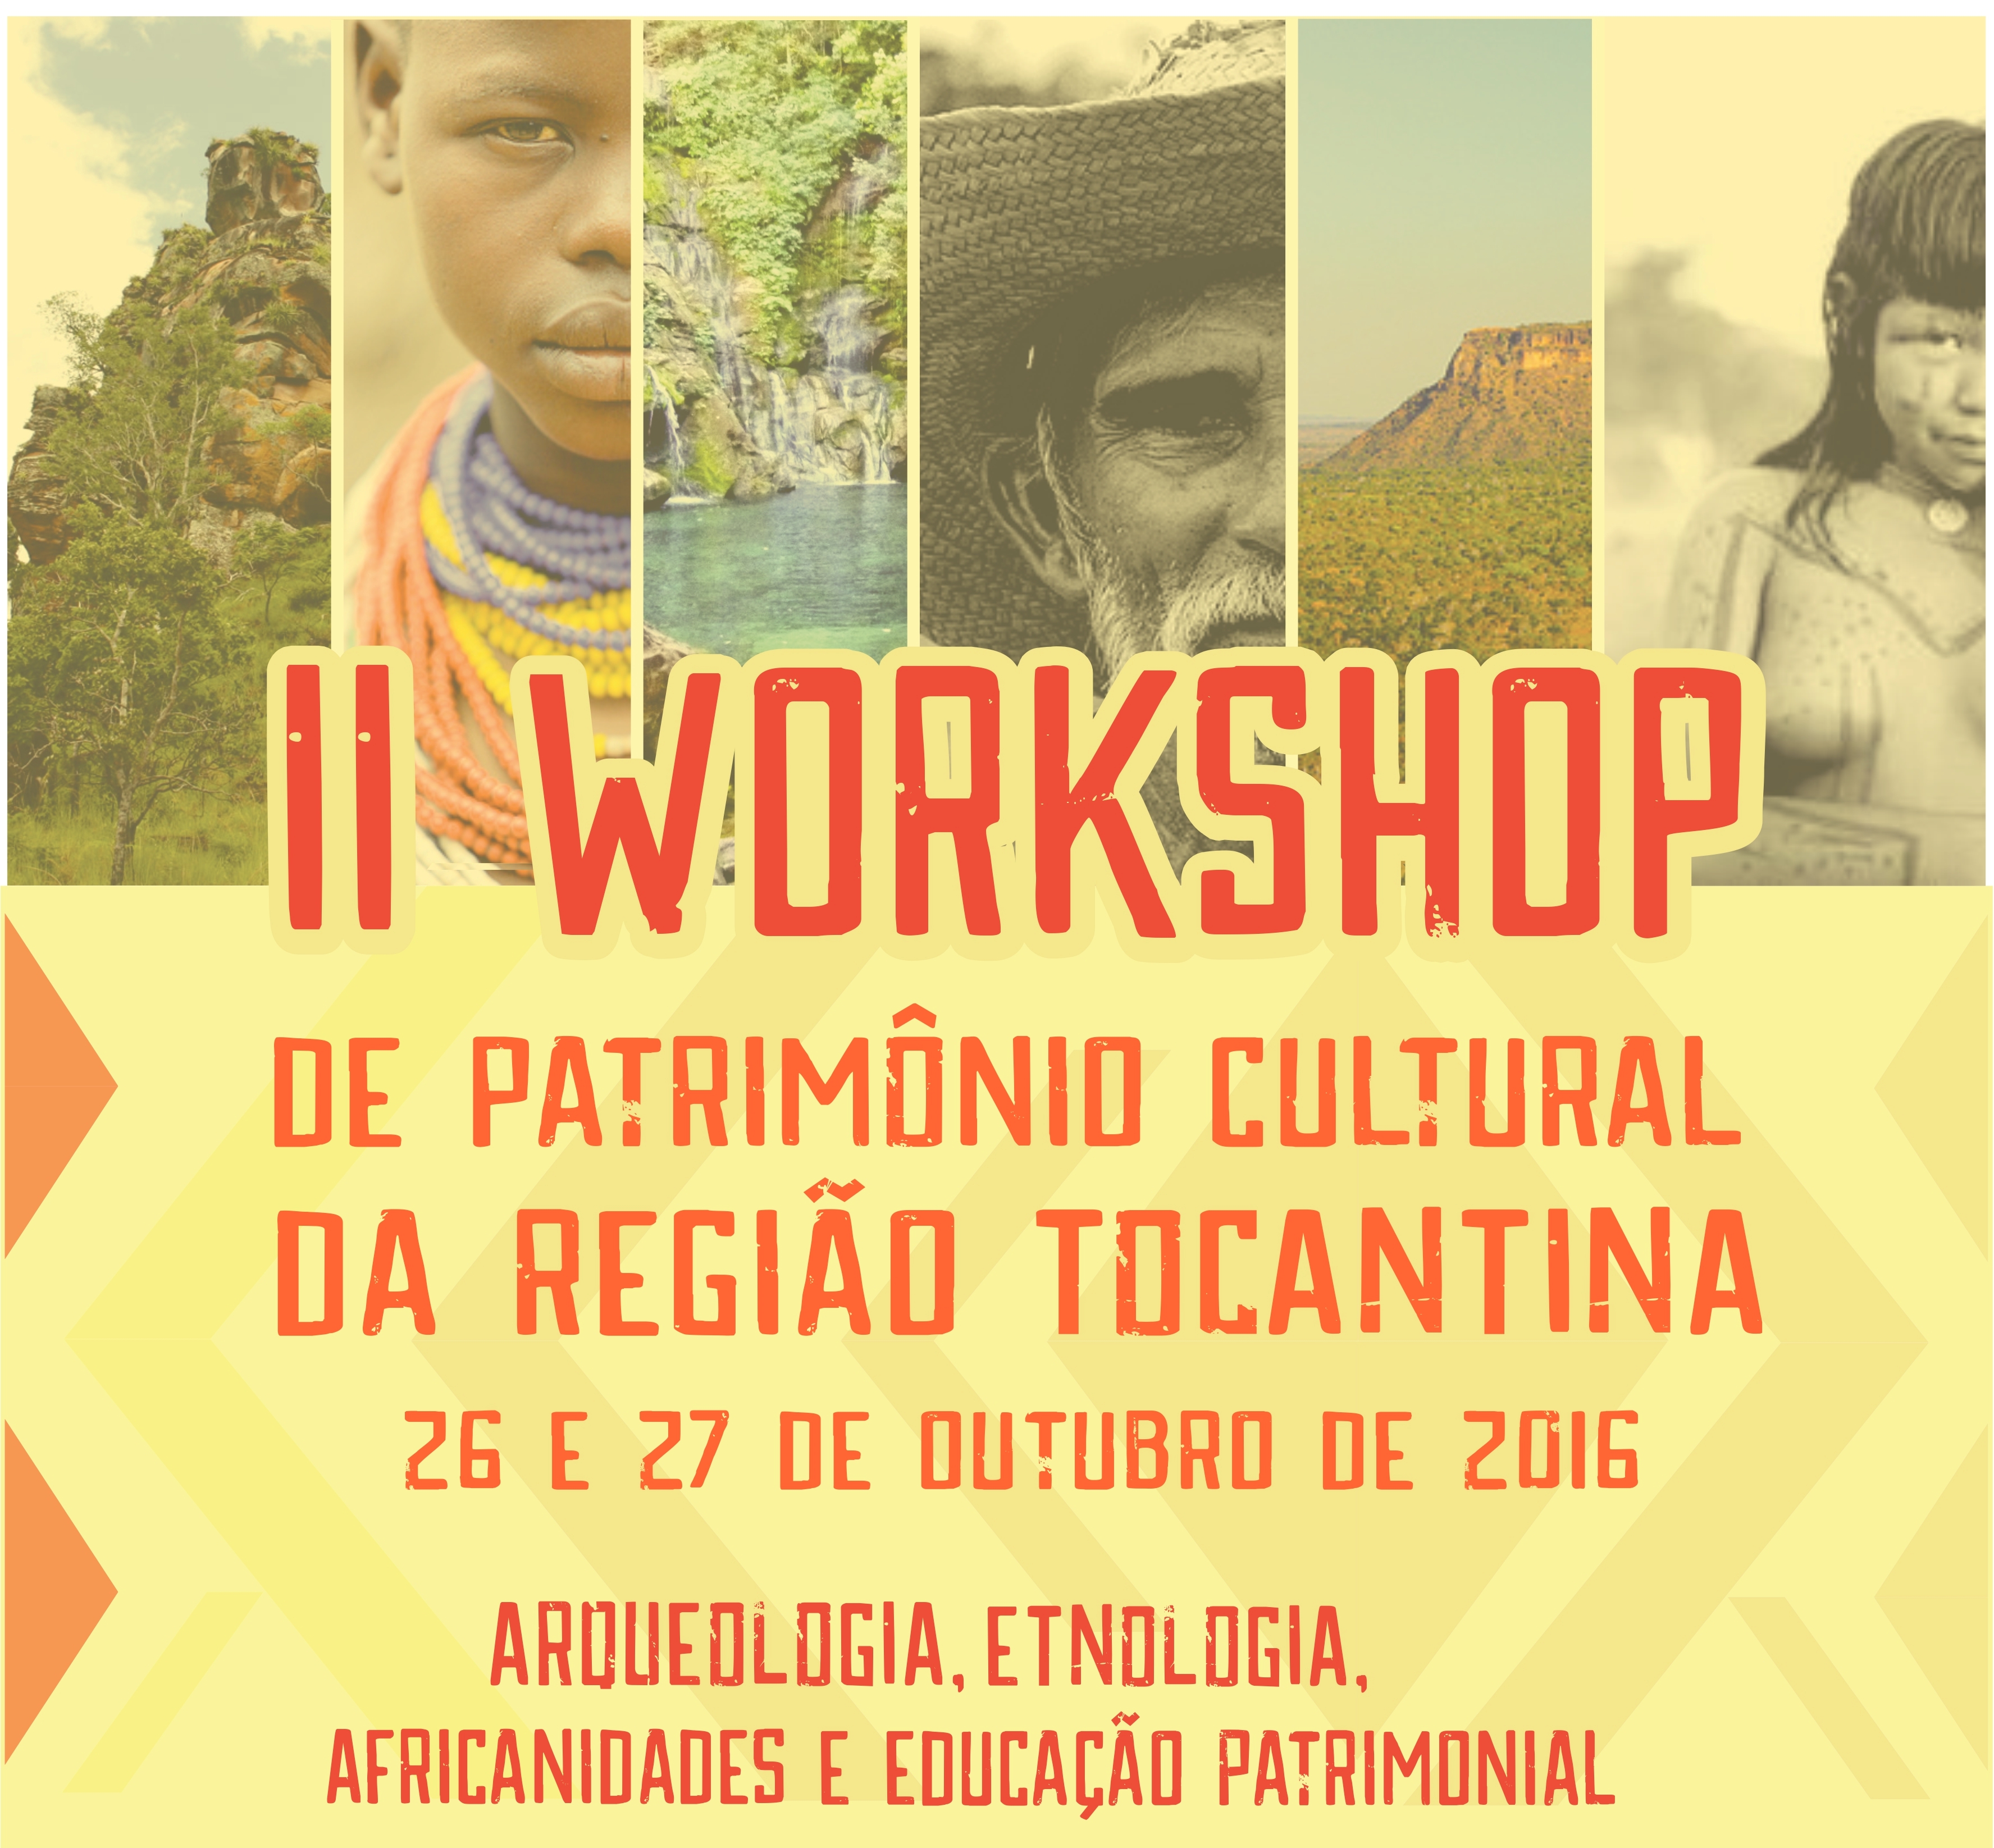 II Workshop de Patrimônio Cultural da Região Tocantina: será realizado no Campus Imperatriz